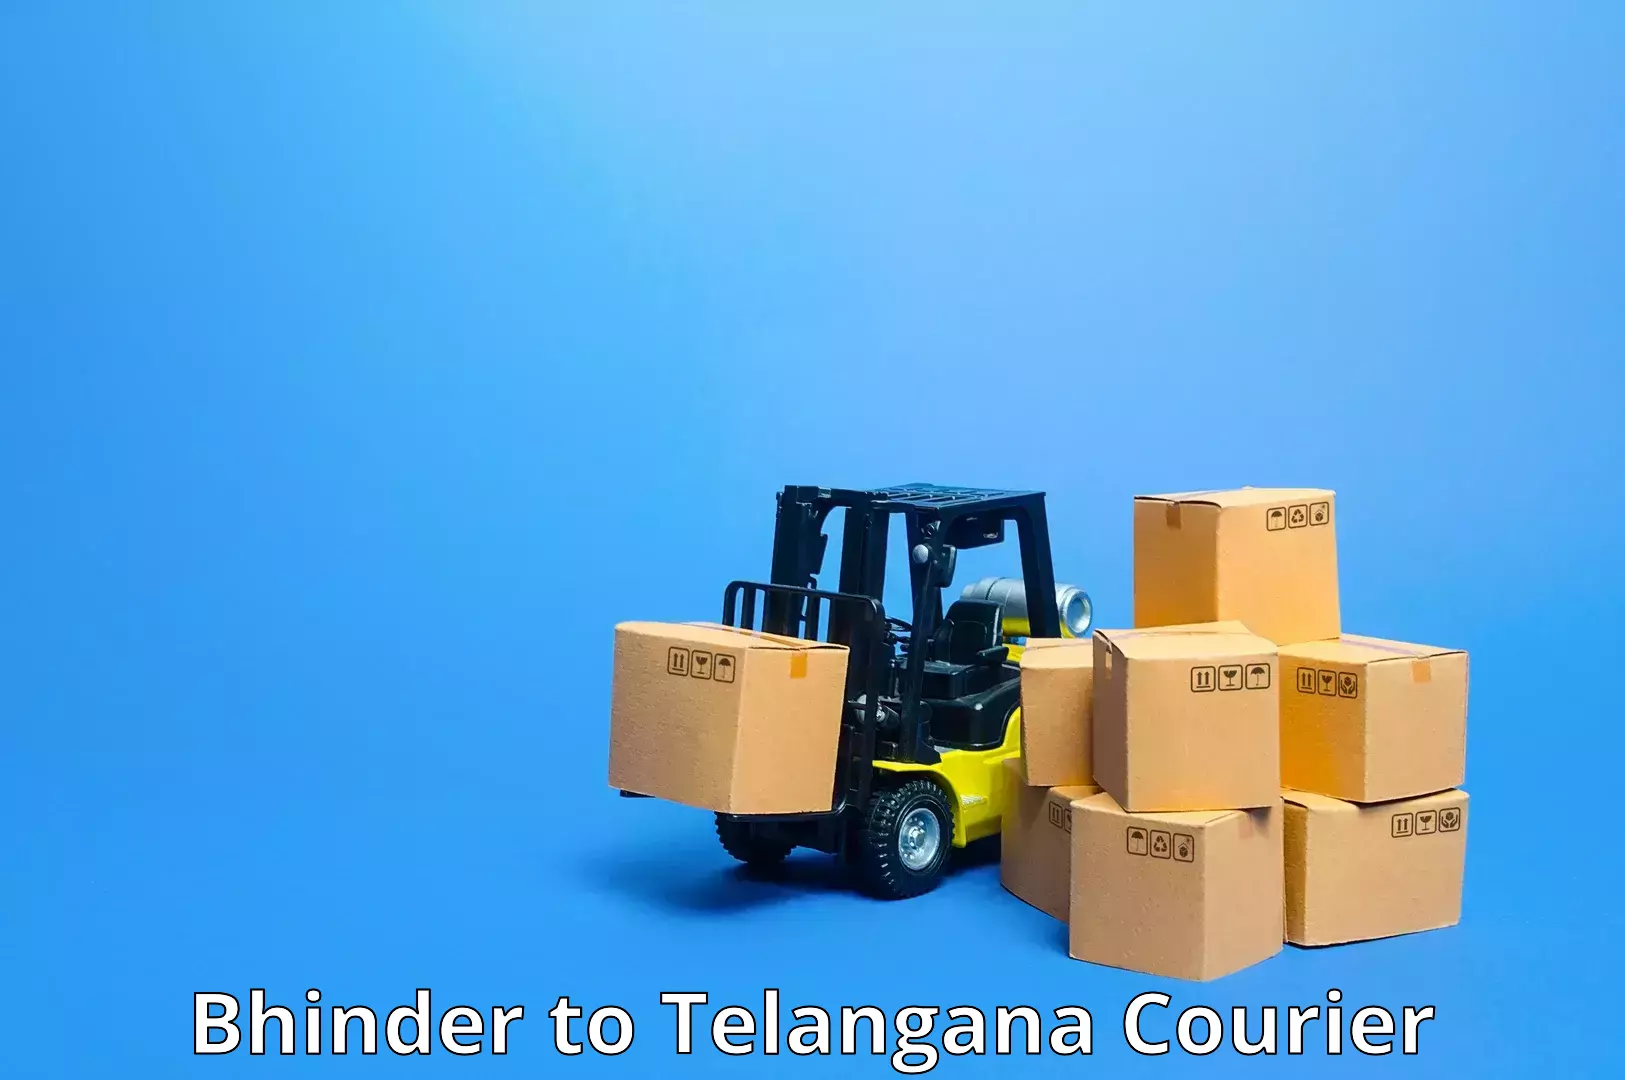 Comprehensive shipping network Bhinder to Gangadhara